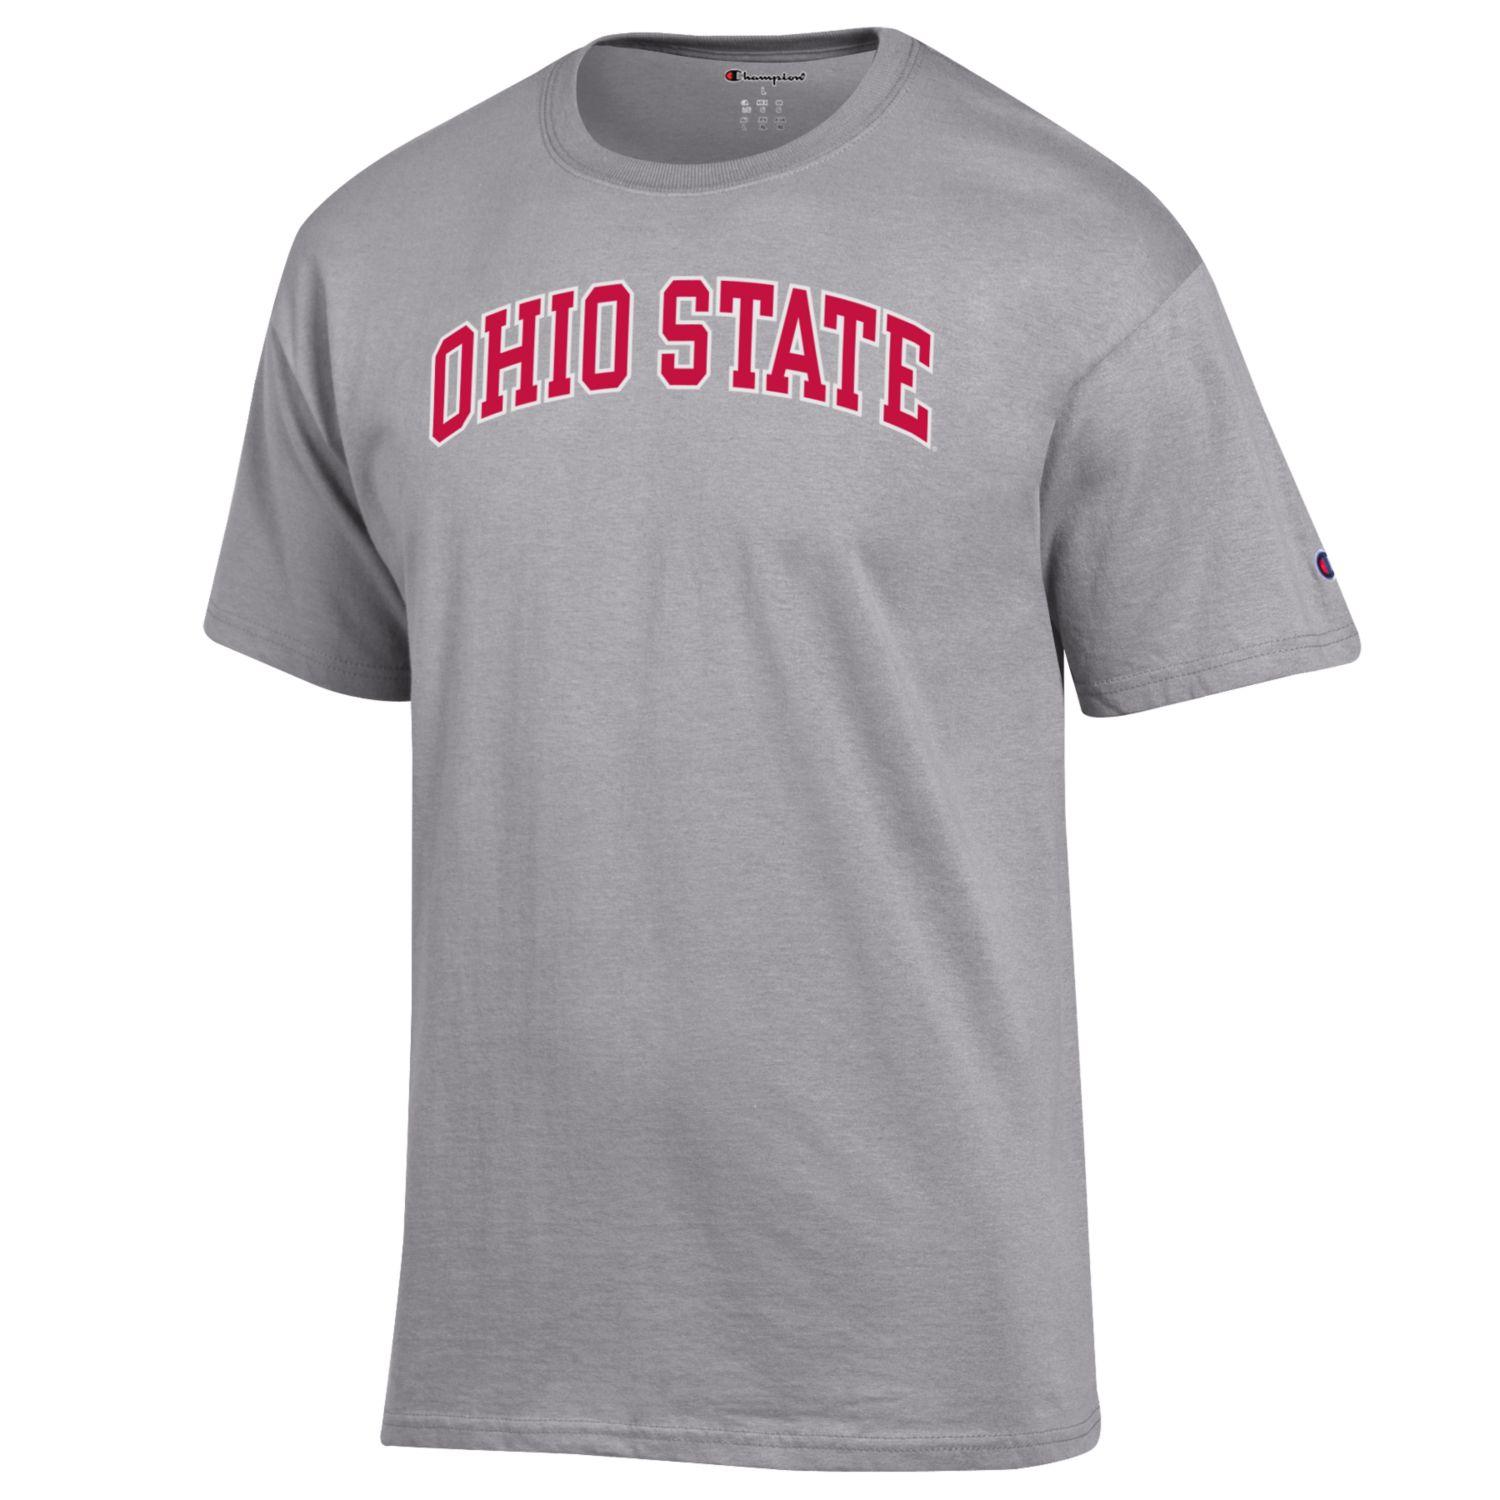 Ohio state on gray t-shirt